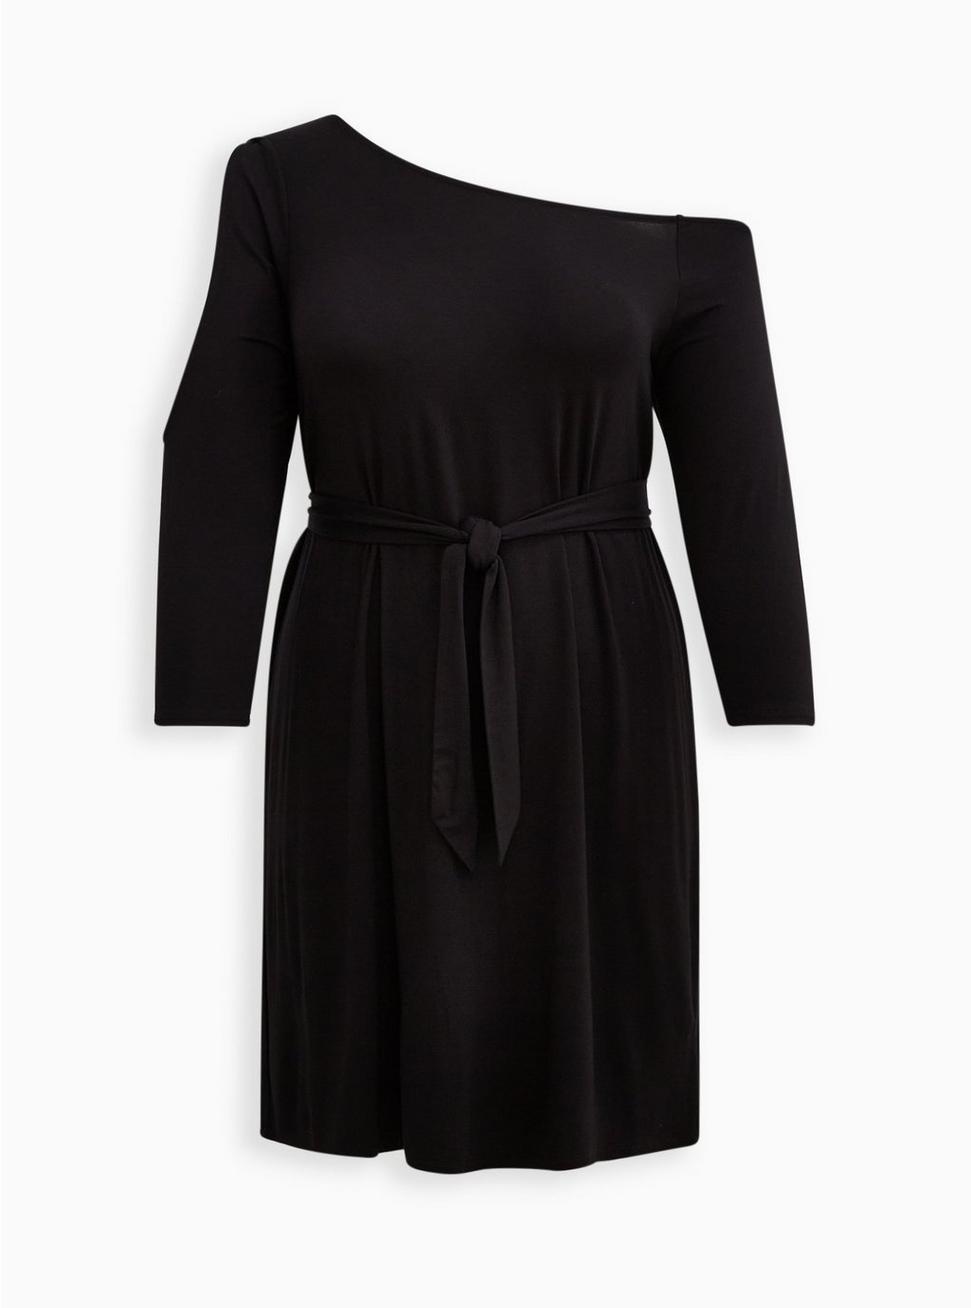 Cold & Off Shoulder T-Shirt Dress - Super Soft Black, DEEP BLACK, hi-res